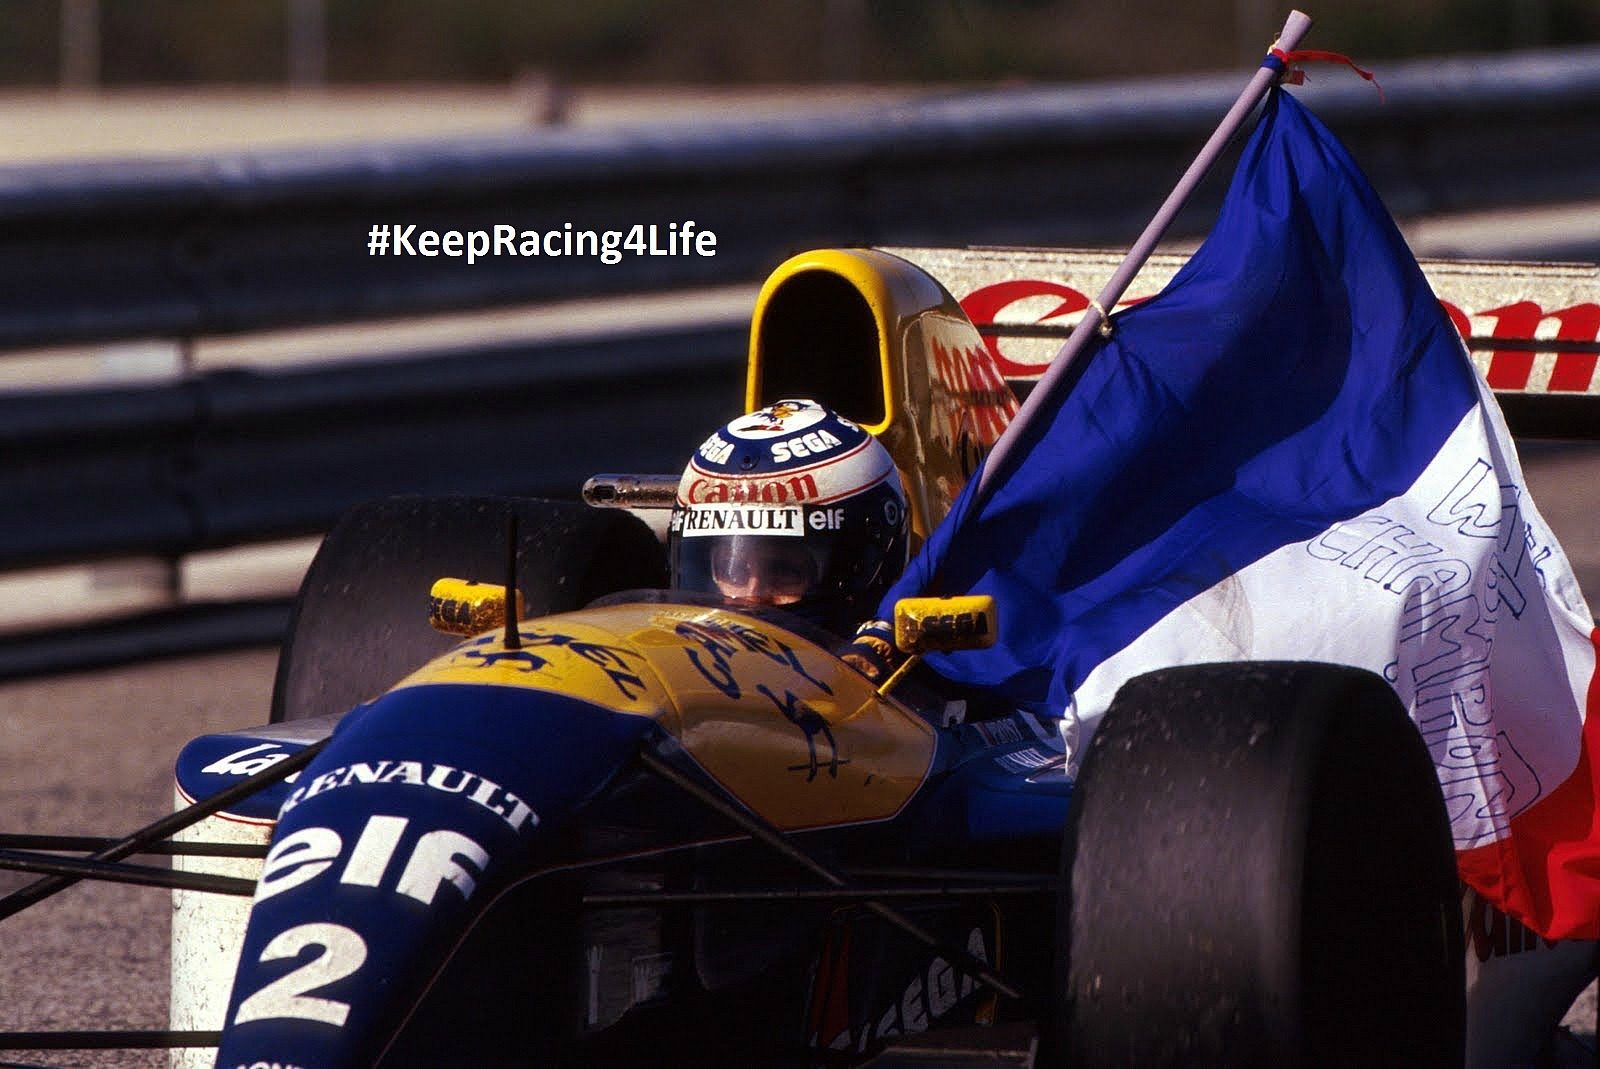 1993 Portuguese GP - Alain Prost Clinches The Title